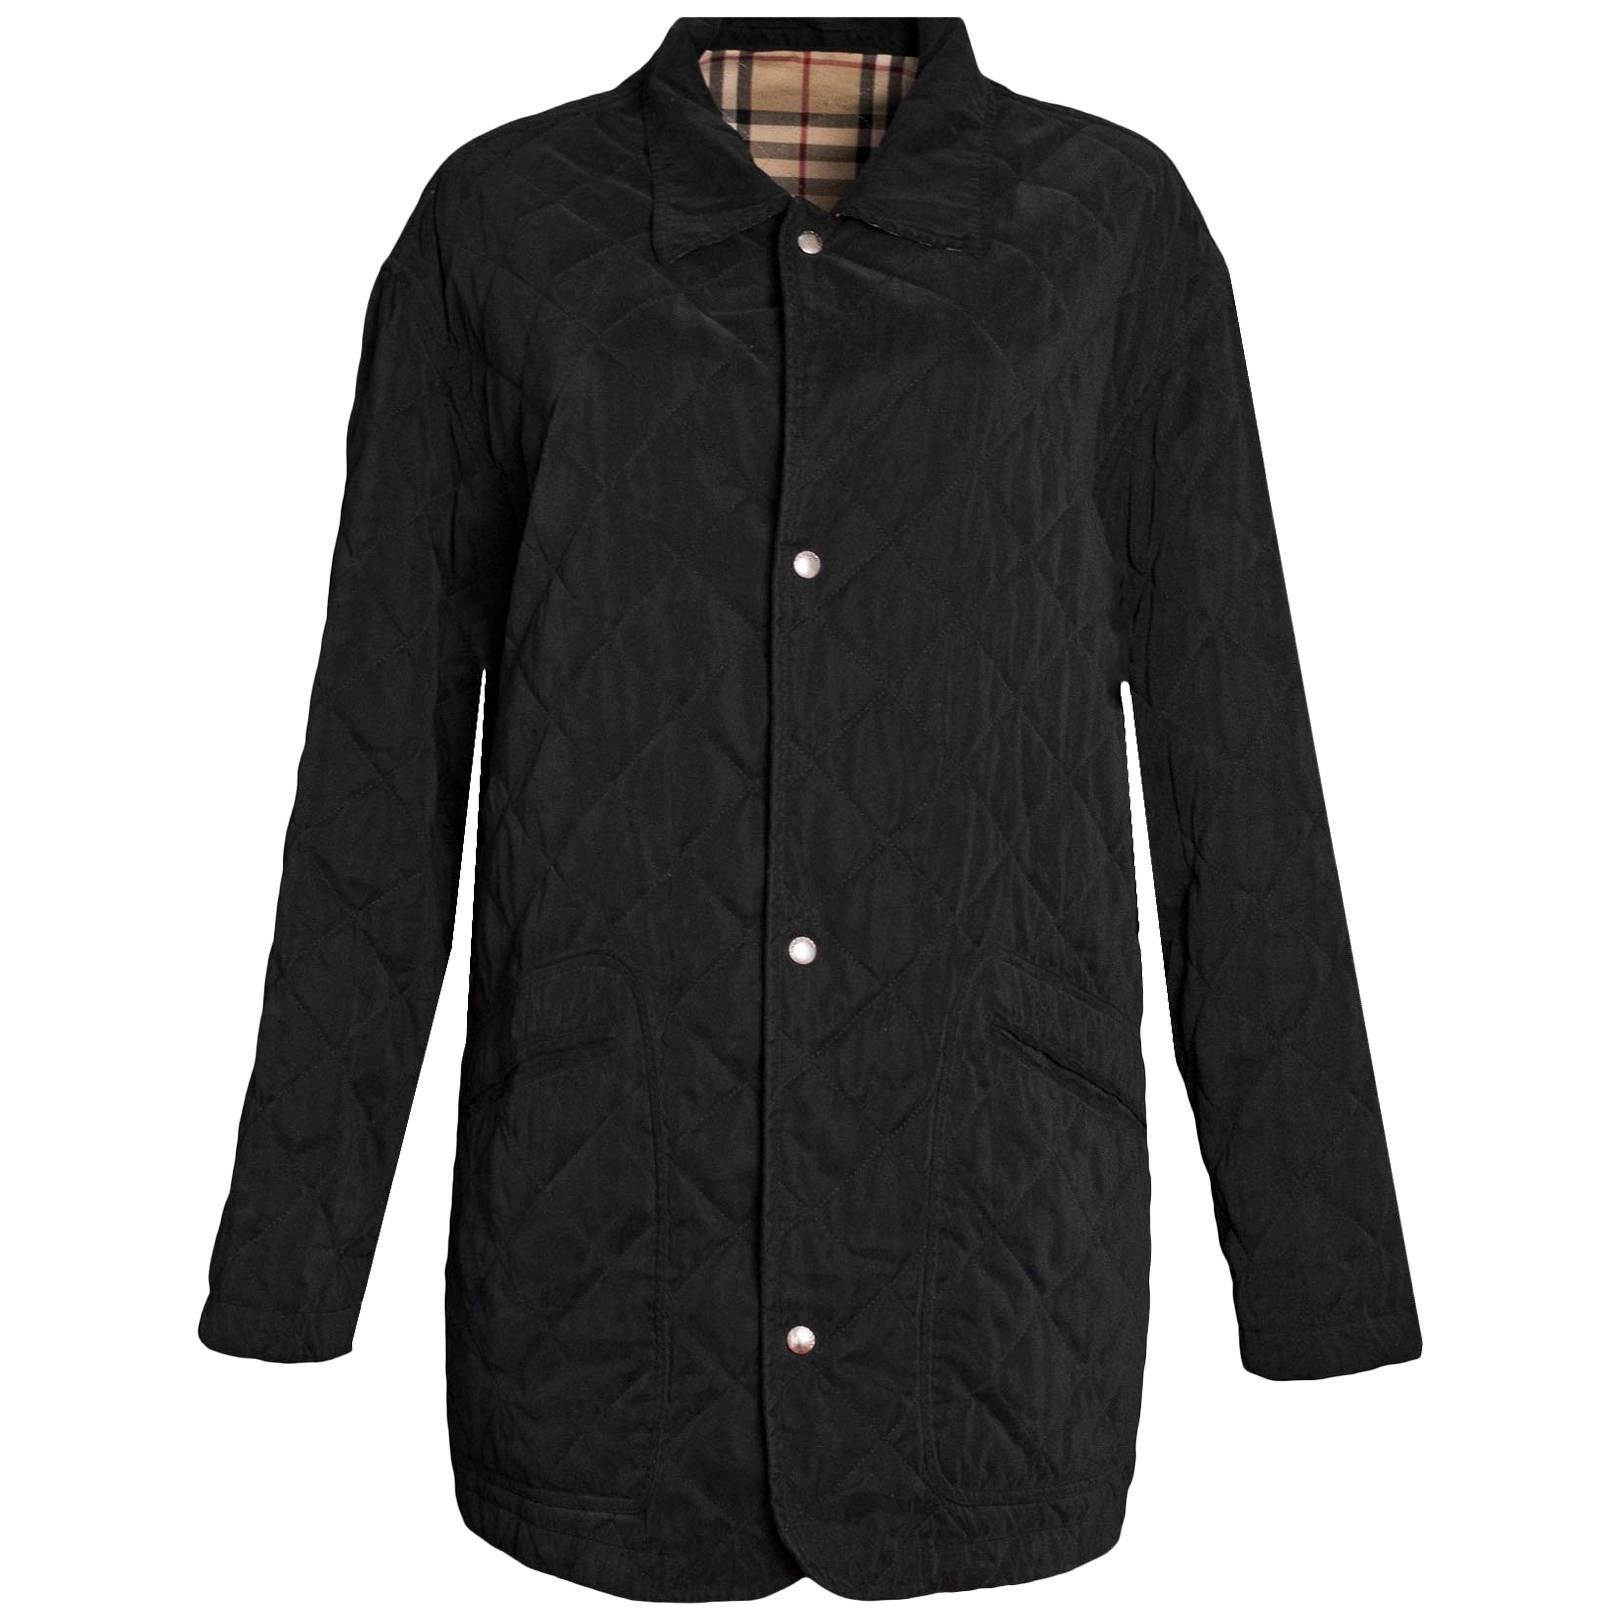 Burberry London Men's Black Quilted Jacket sz M